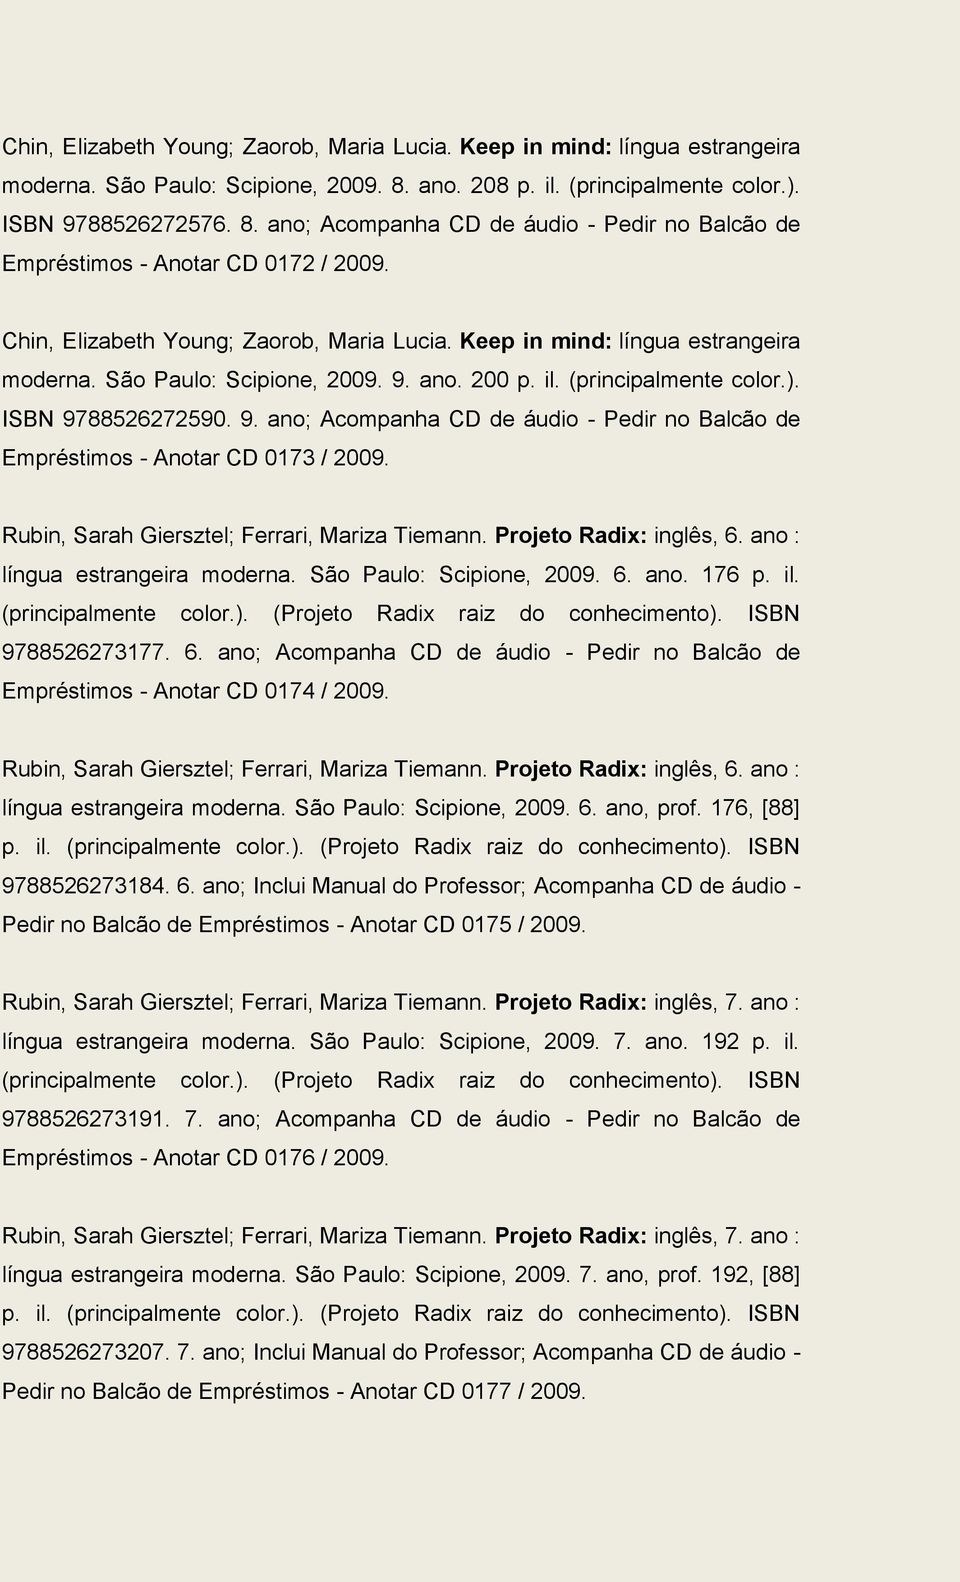 Rubin, Sarah Giersztel; Ferrari, Mariza Tiemann. Projeto Radix: inglês, 6. ano : língua estrangeira moderna. São Paulo: Scipione, 2009. 6. ano. 176 p. il. (principalmente color.).